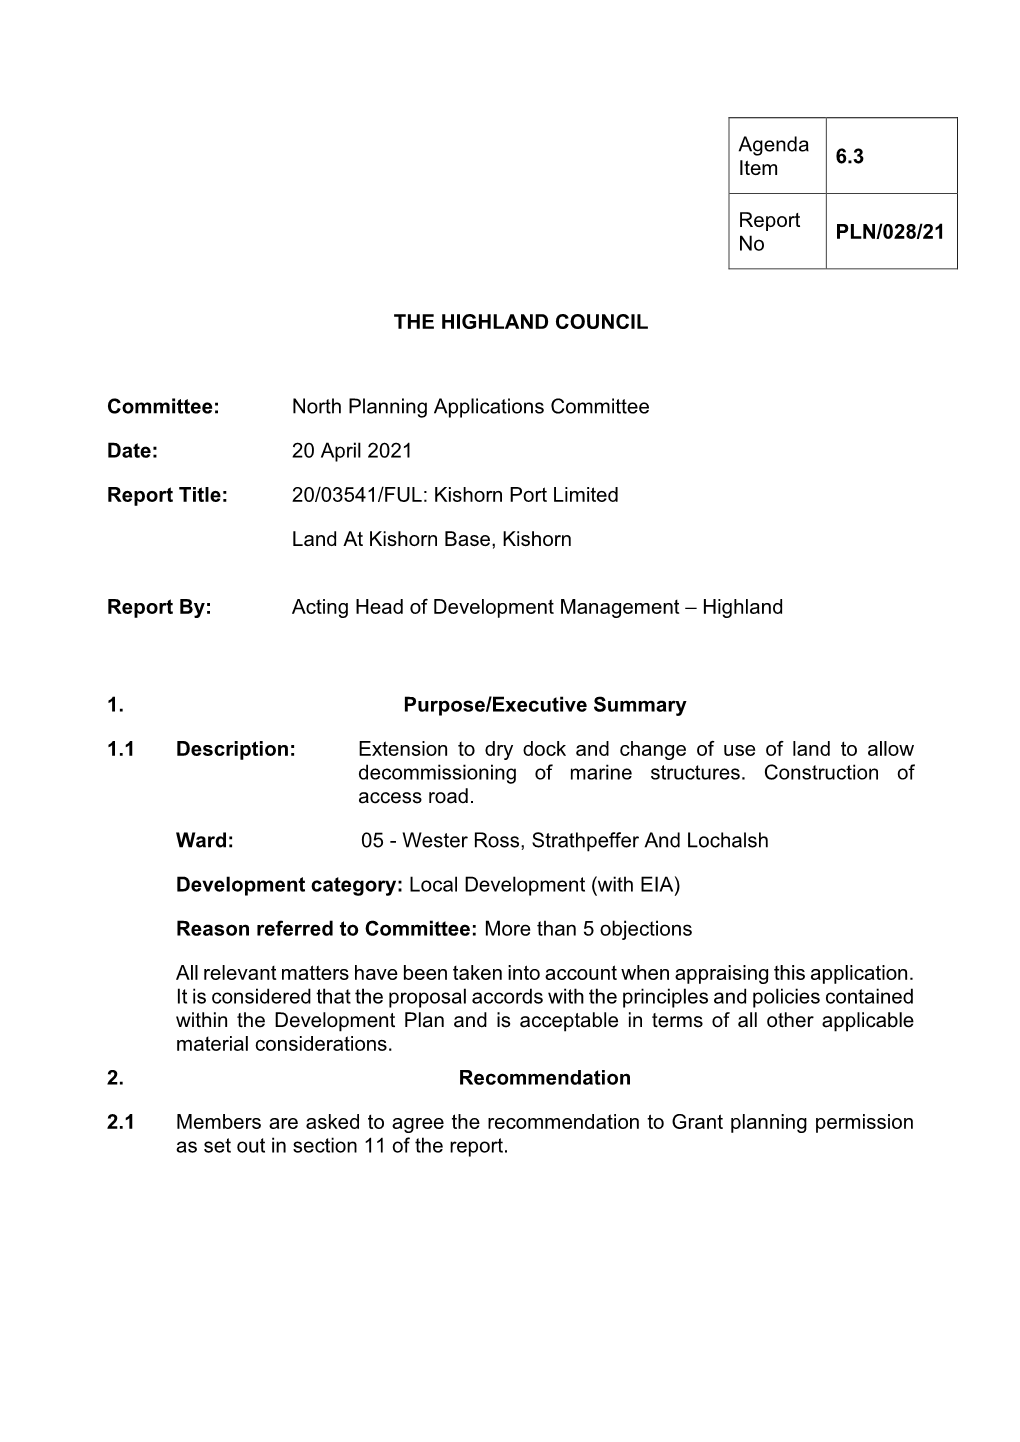 Applicant: Kishorn Port Limited (20/03541/FUL